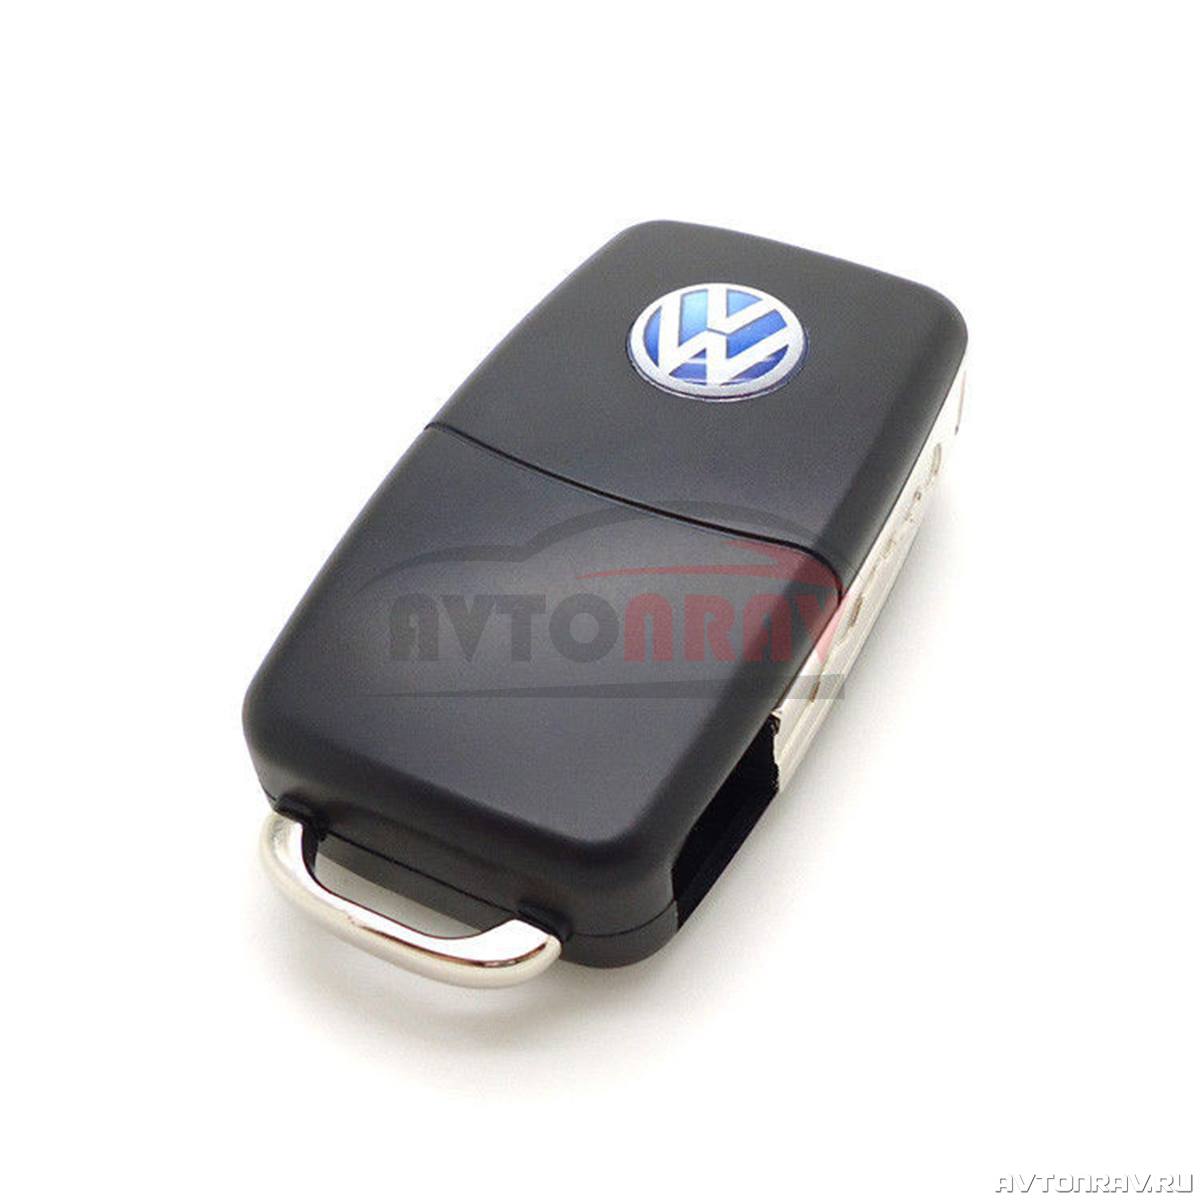 Flash ключ. Флешка Volkswagen USB. Ключи Фольксваген Крафтер. USB 3.0 флешка ключ. USB флешку на Volkswagen 16 ГБ.